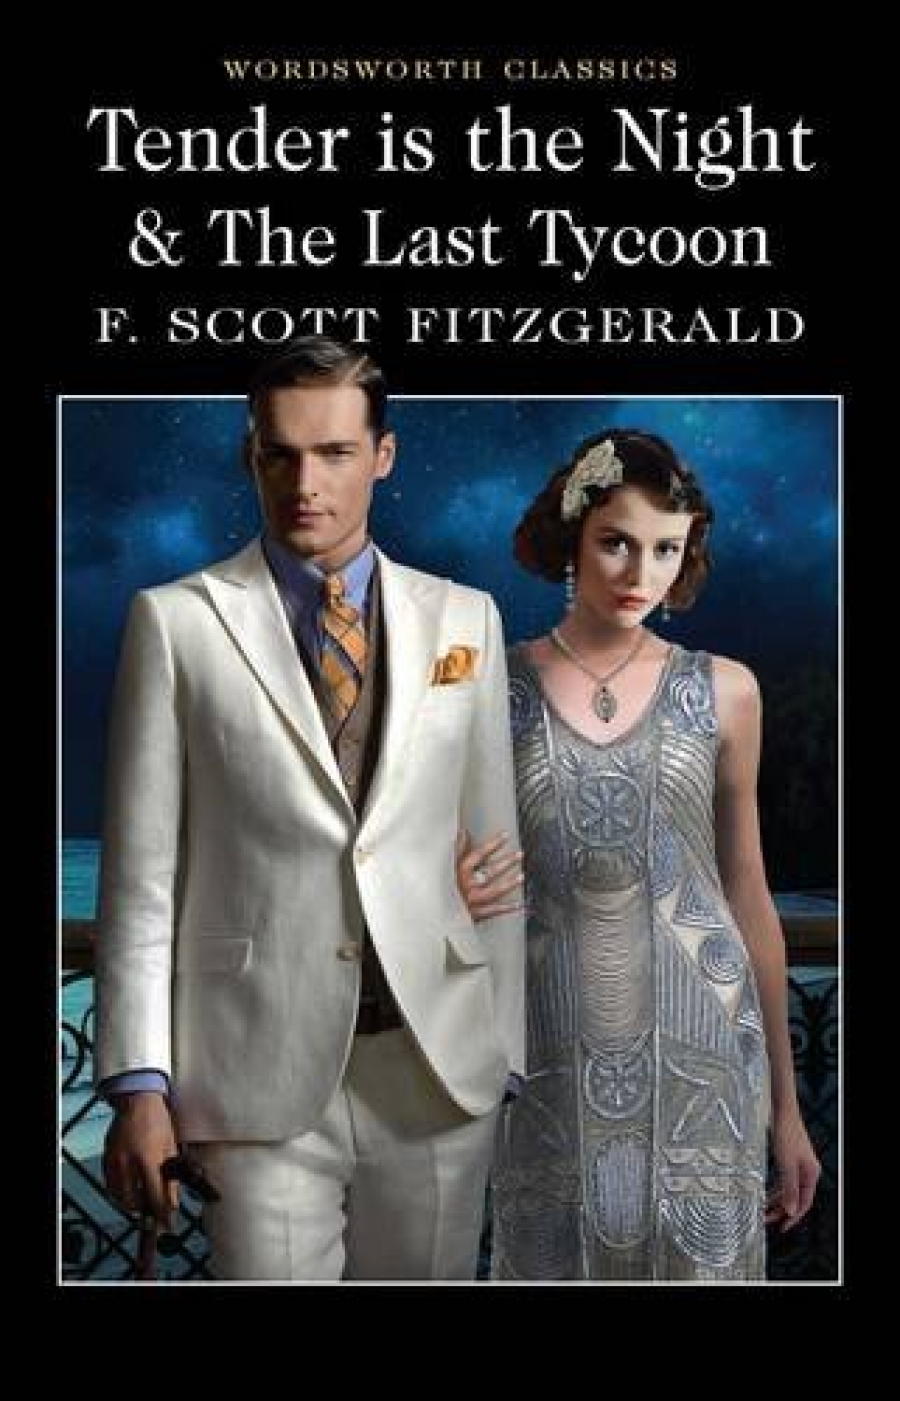 Francis Scott Fitzgerald Tender is night & the Last Tycoon 